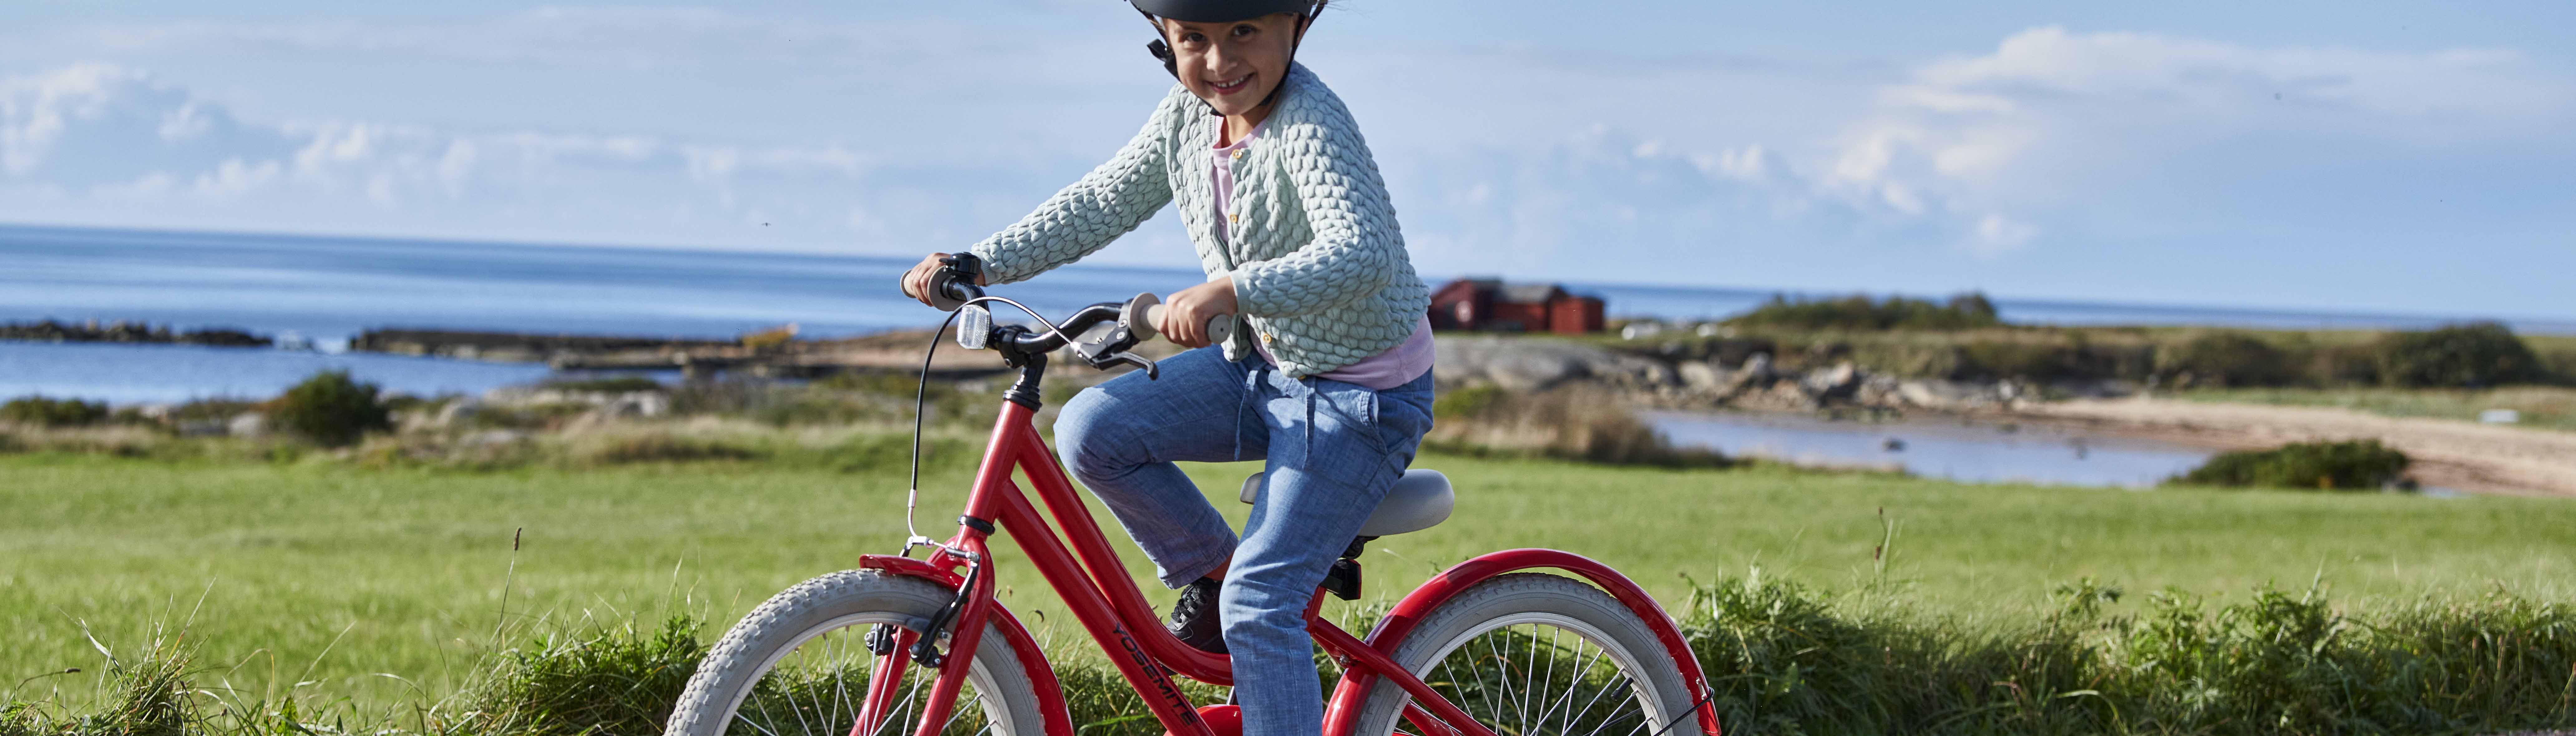 Children's bikes – freedom on two wheels